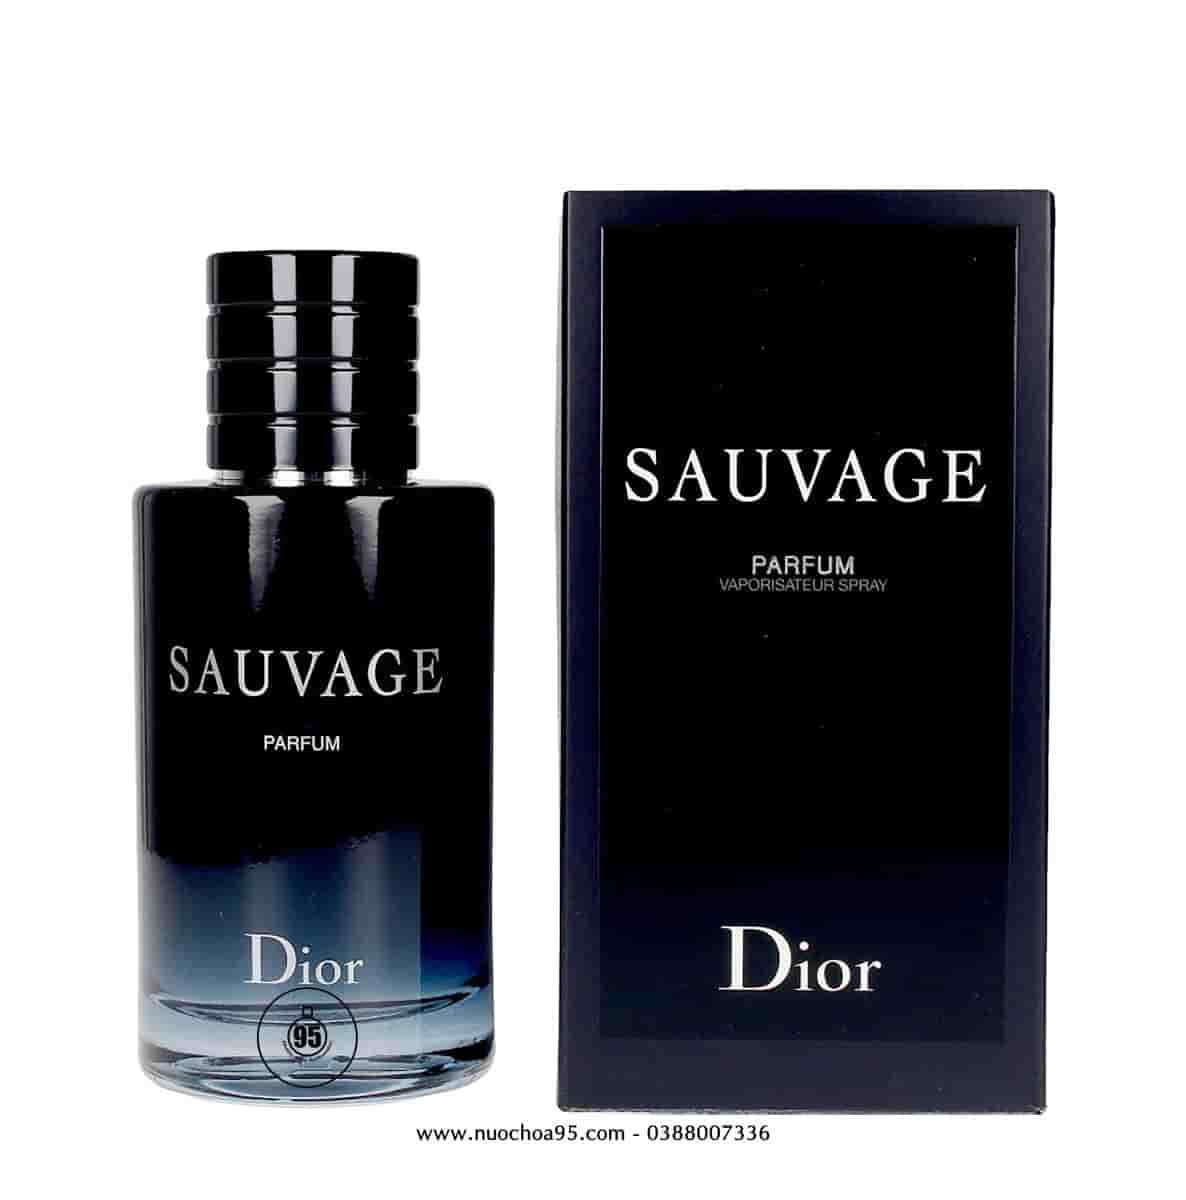 Dior Homme Parfum  Parfum  5 ml  Decant  Perfumes Cardales